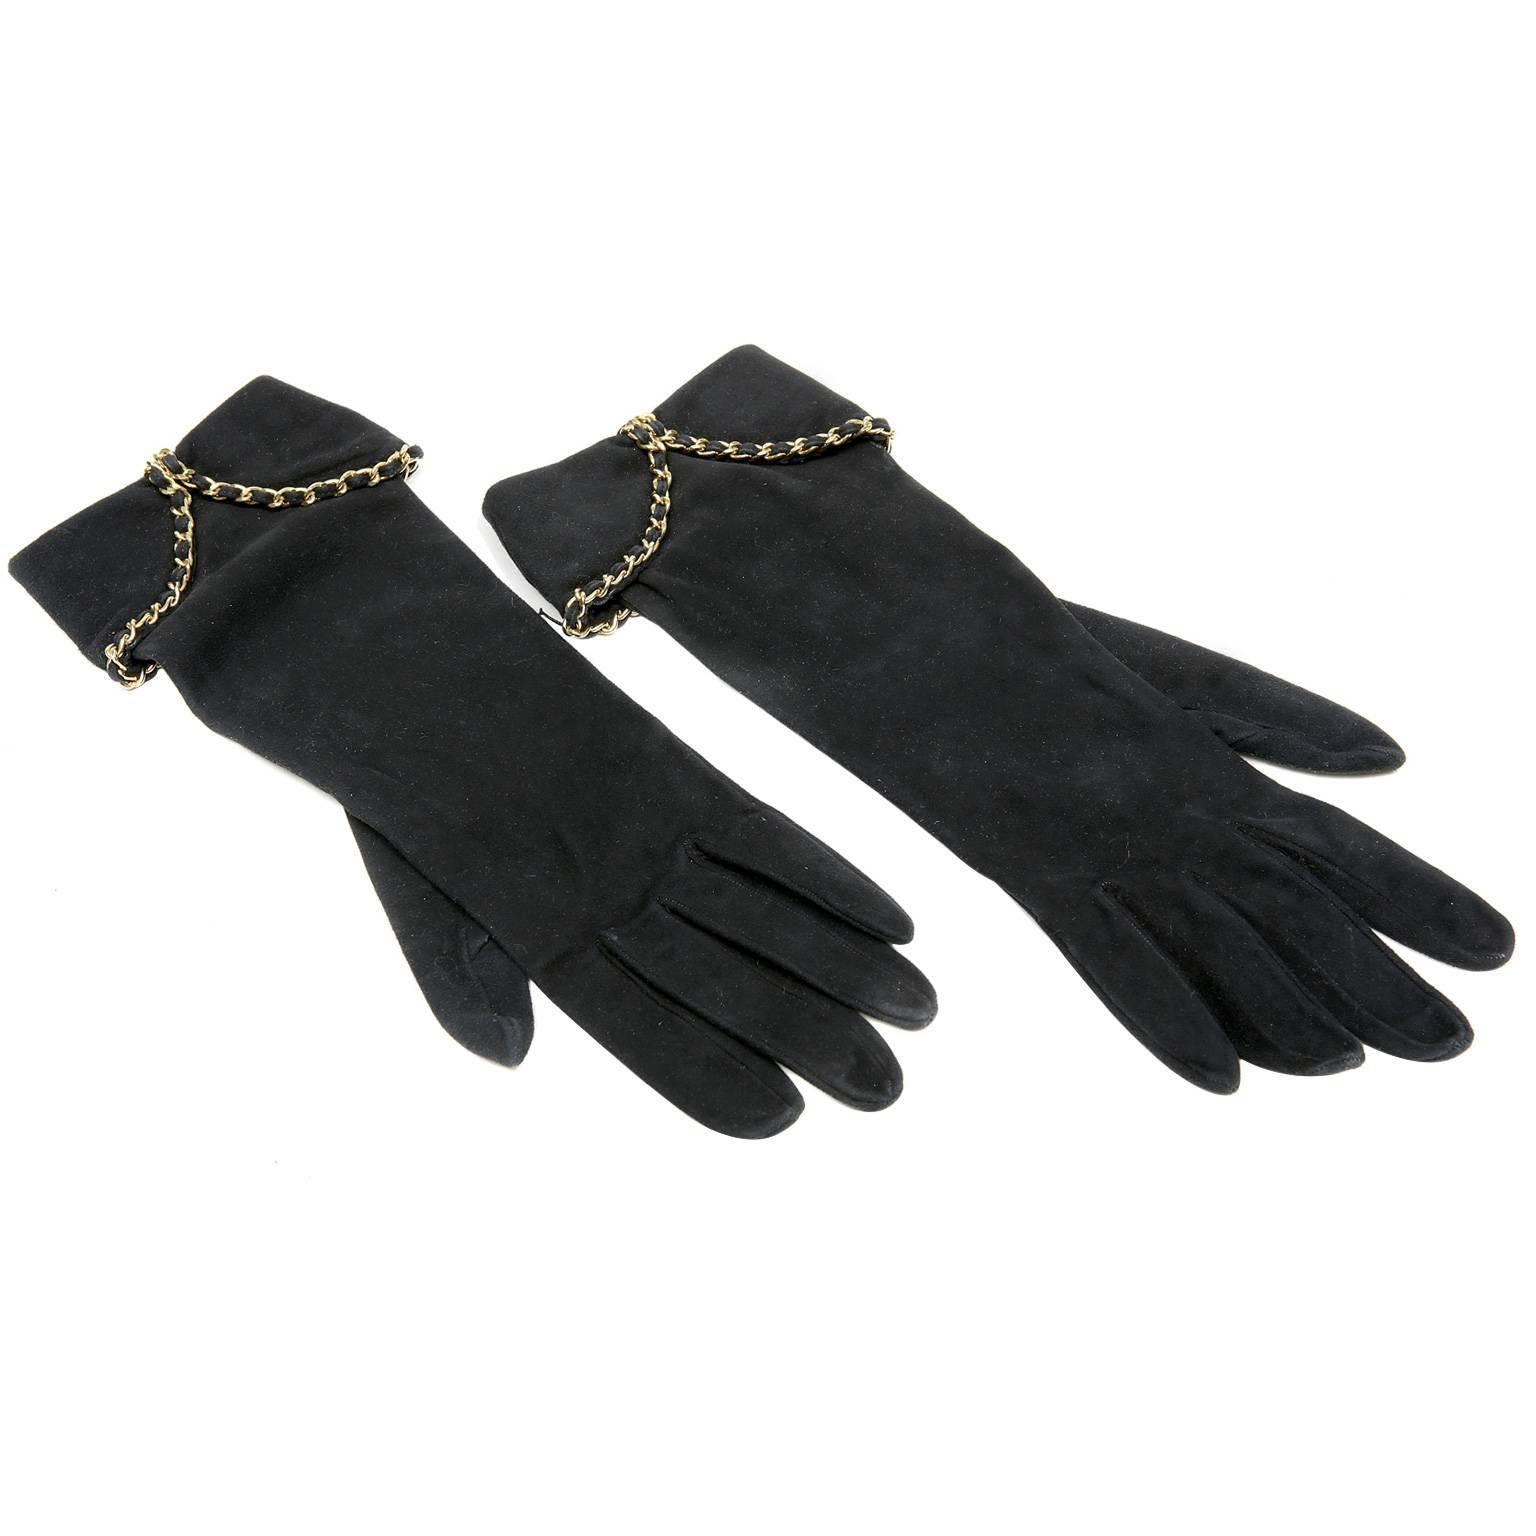 Chanel Black Suede Runway Gloves- size 7.5